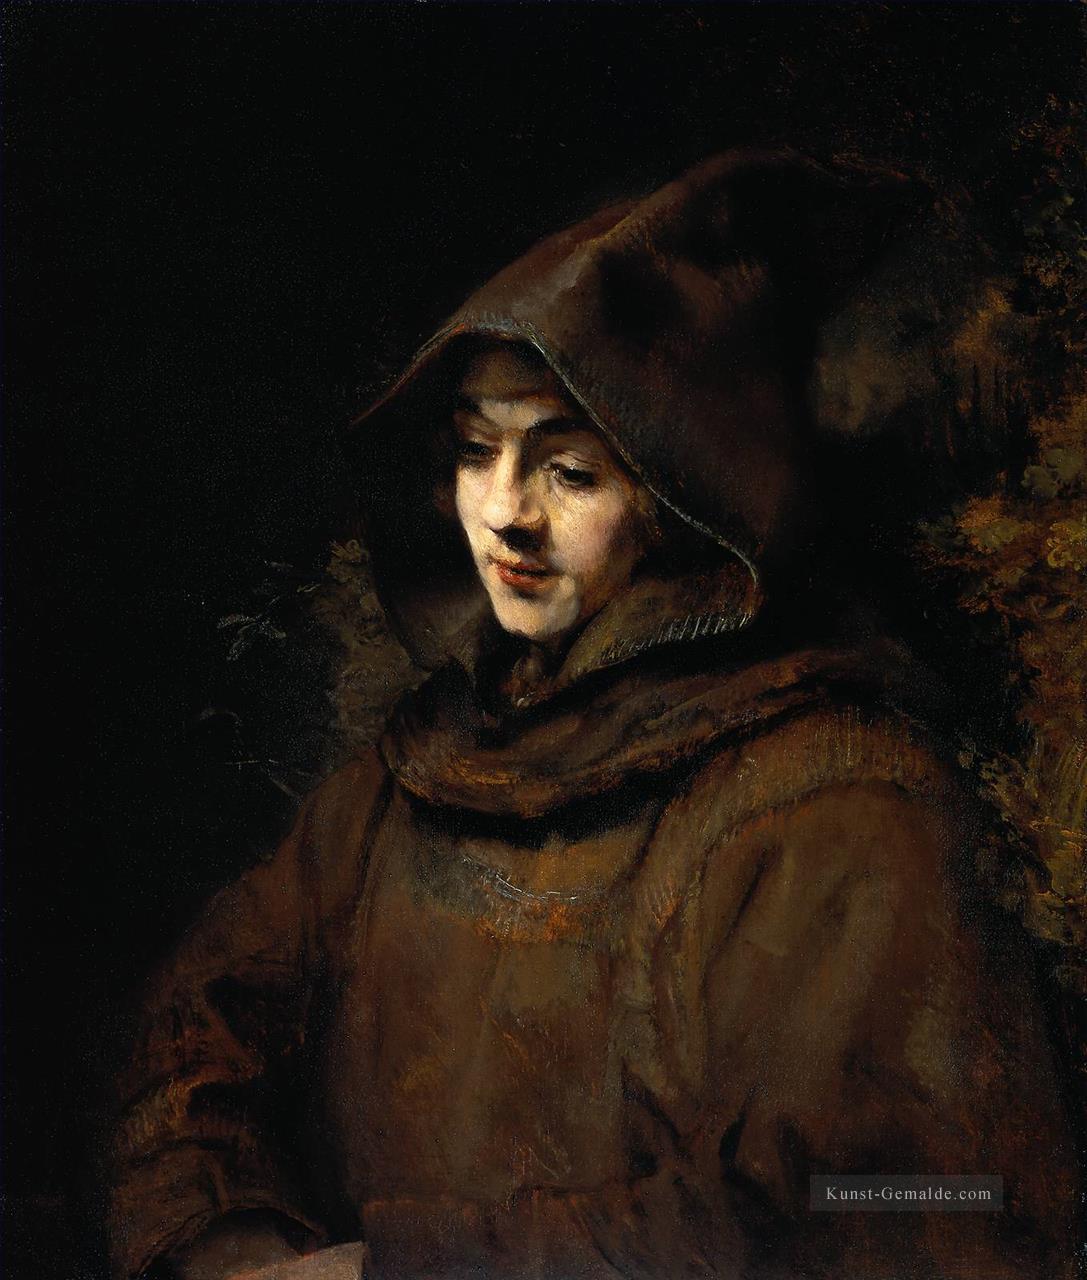 Titus van Rijn in einem Monks Habit Porträt Rembrandts Ölgemälde